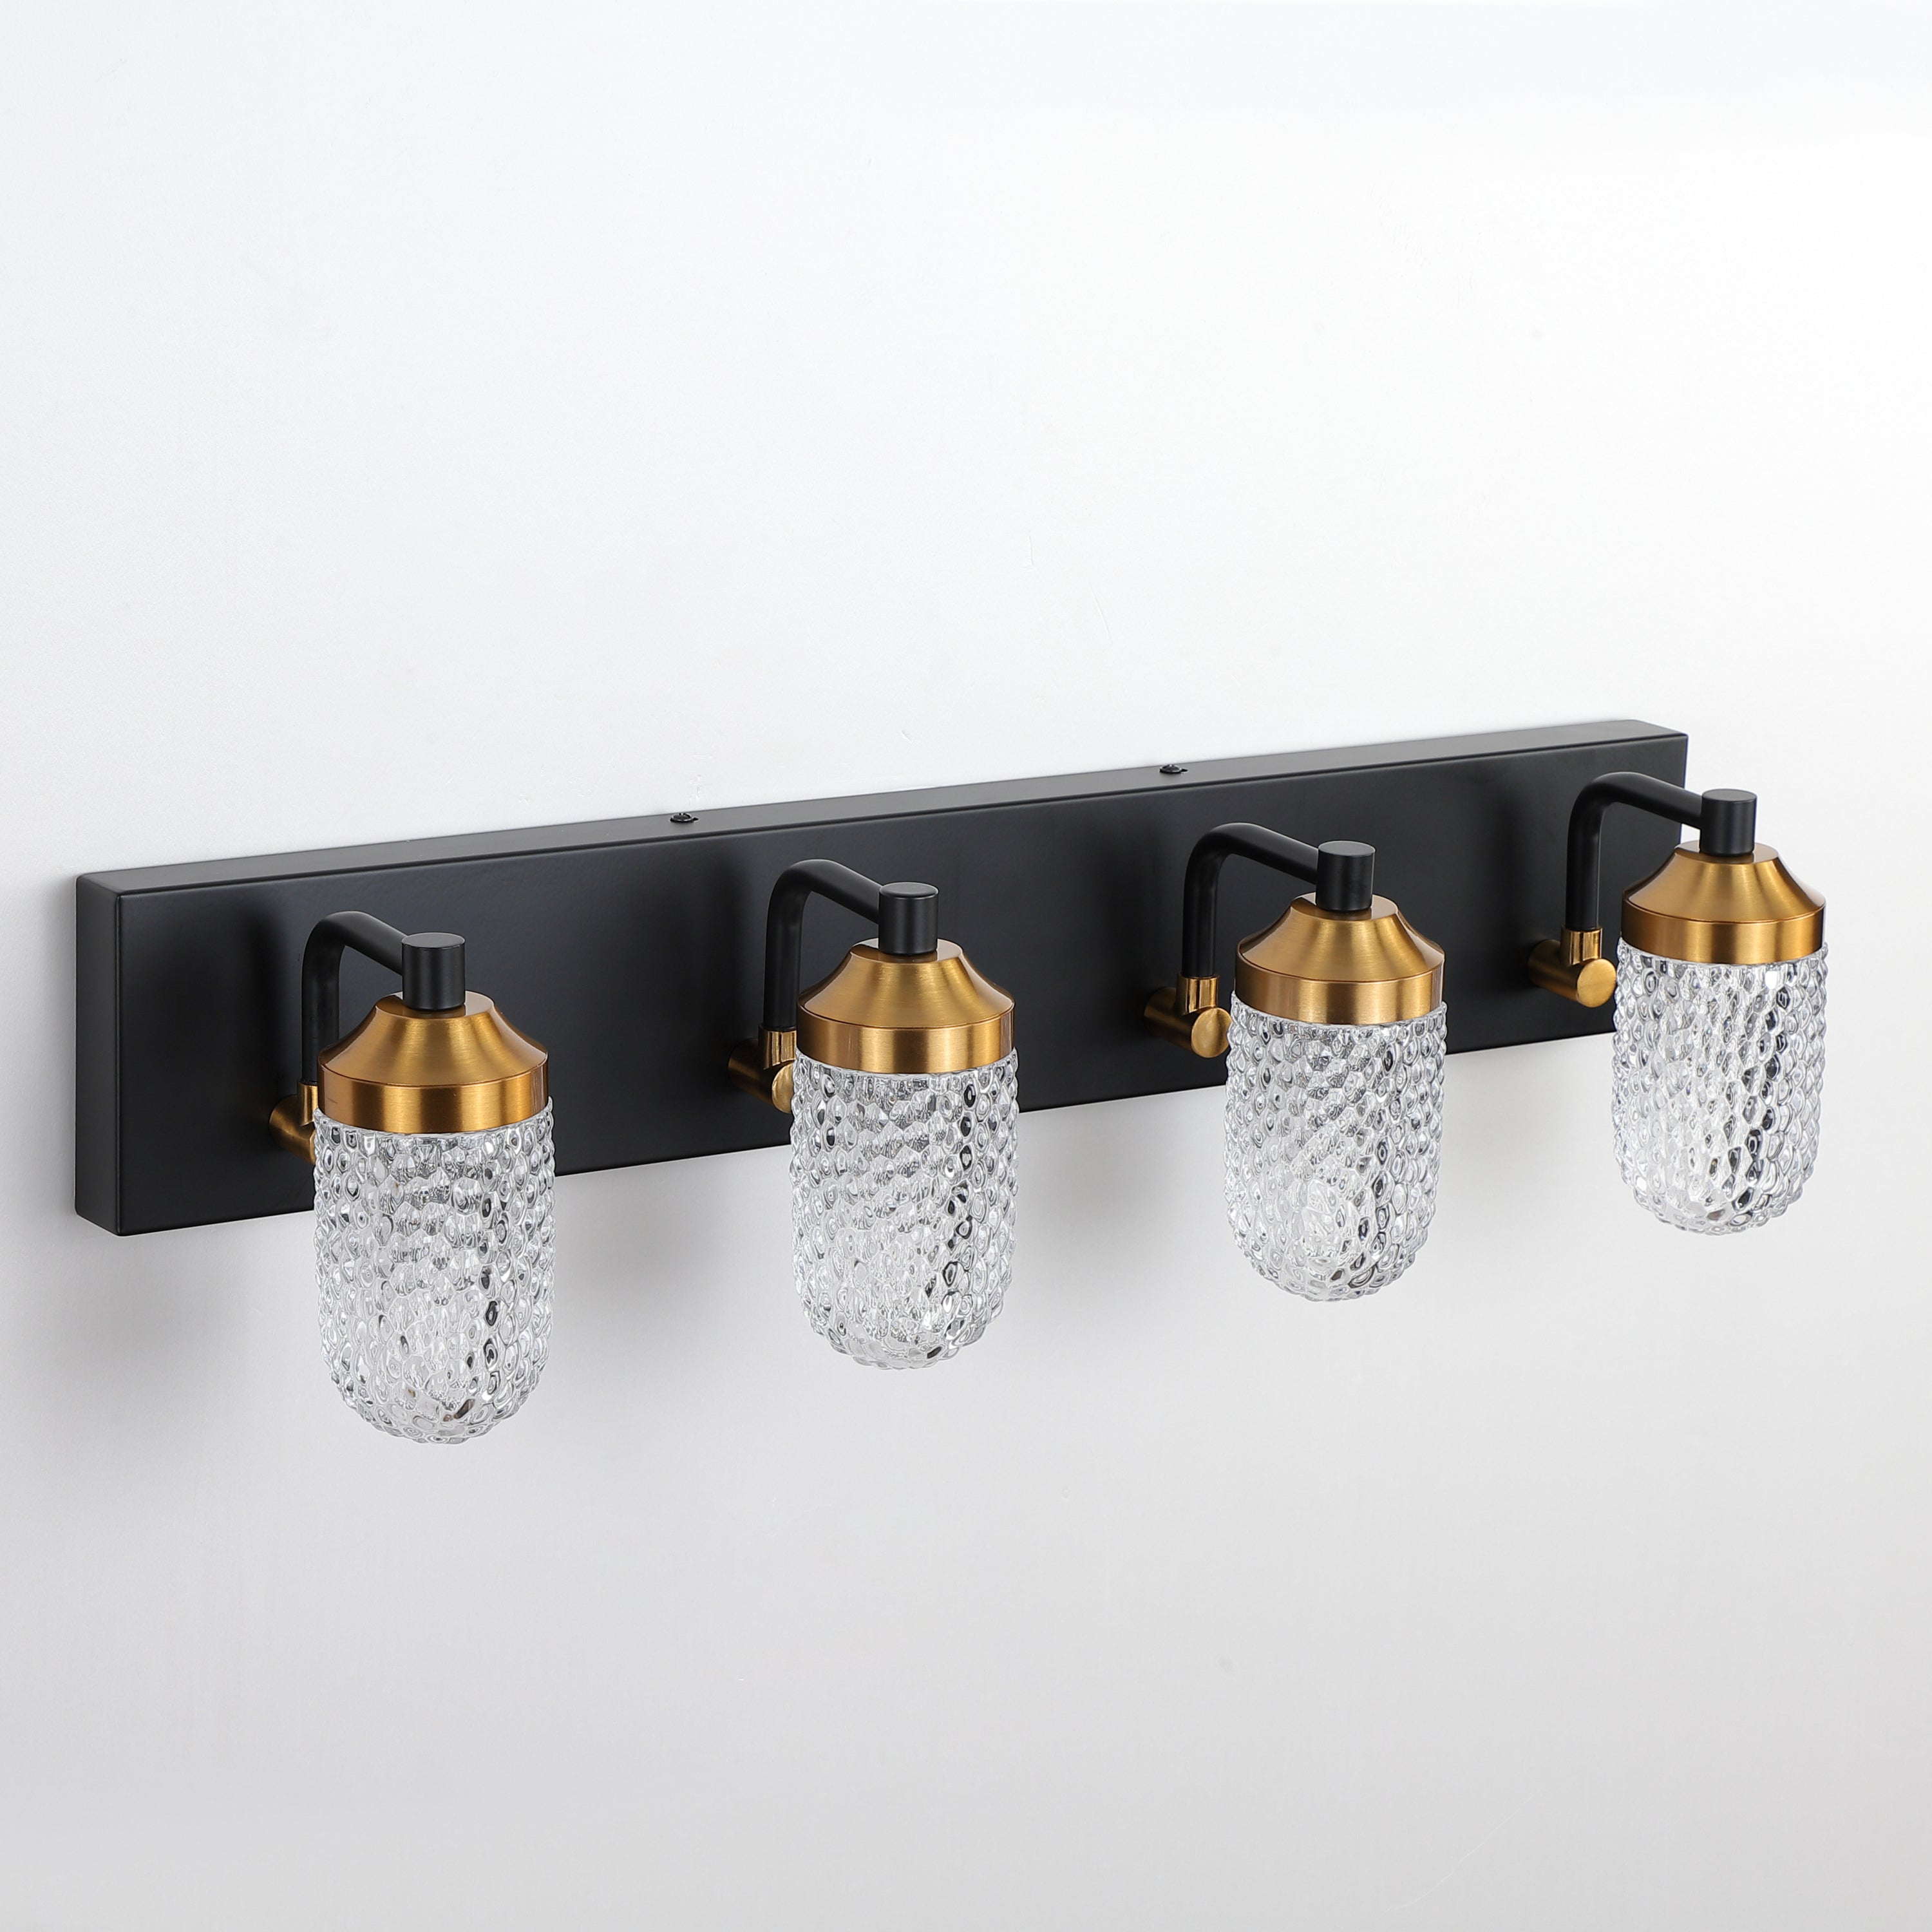 Vanity Lights With 4 LED Bulbs For Bathroom Lighting